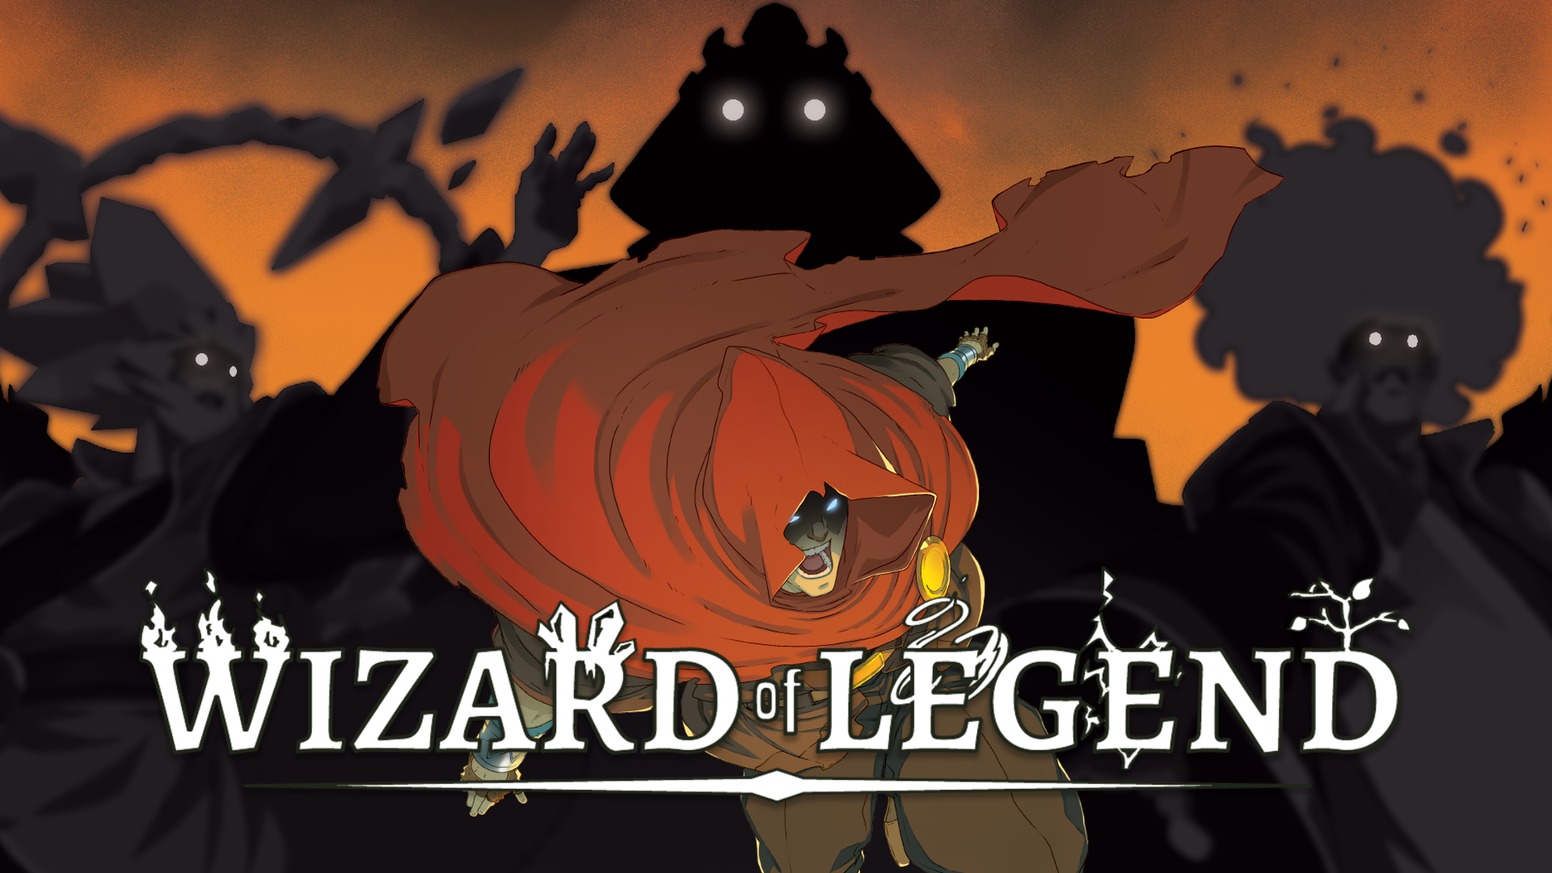 Wizard Of Legend HD wallpapers, Desktop wallpaper - most viewed